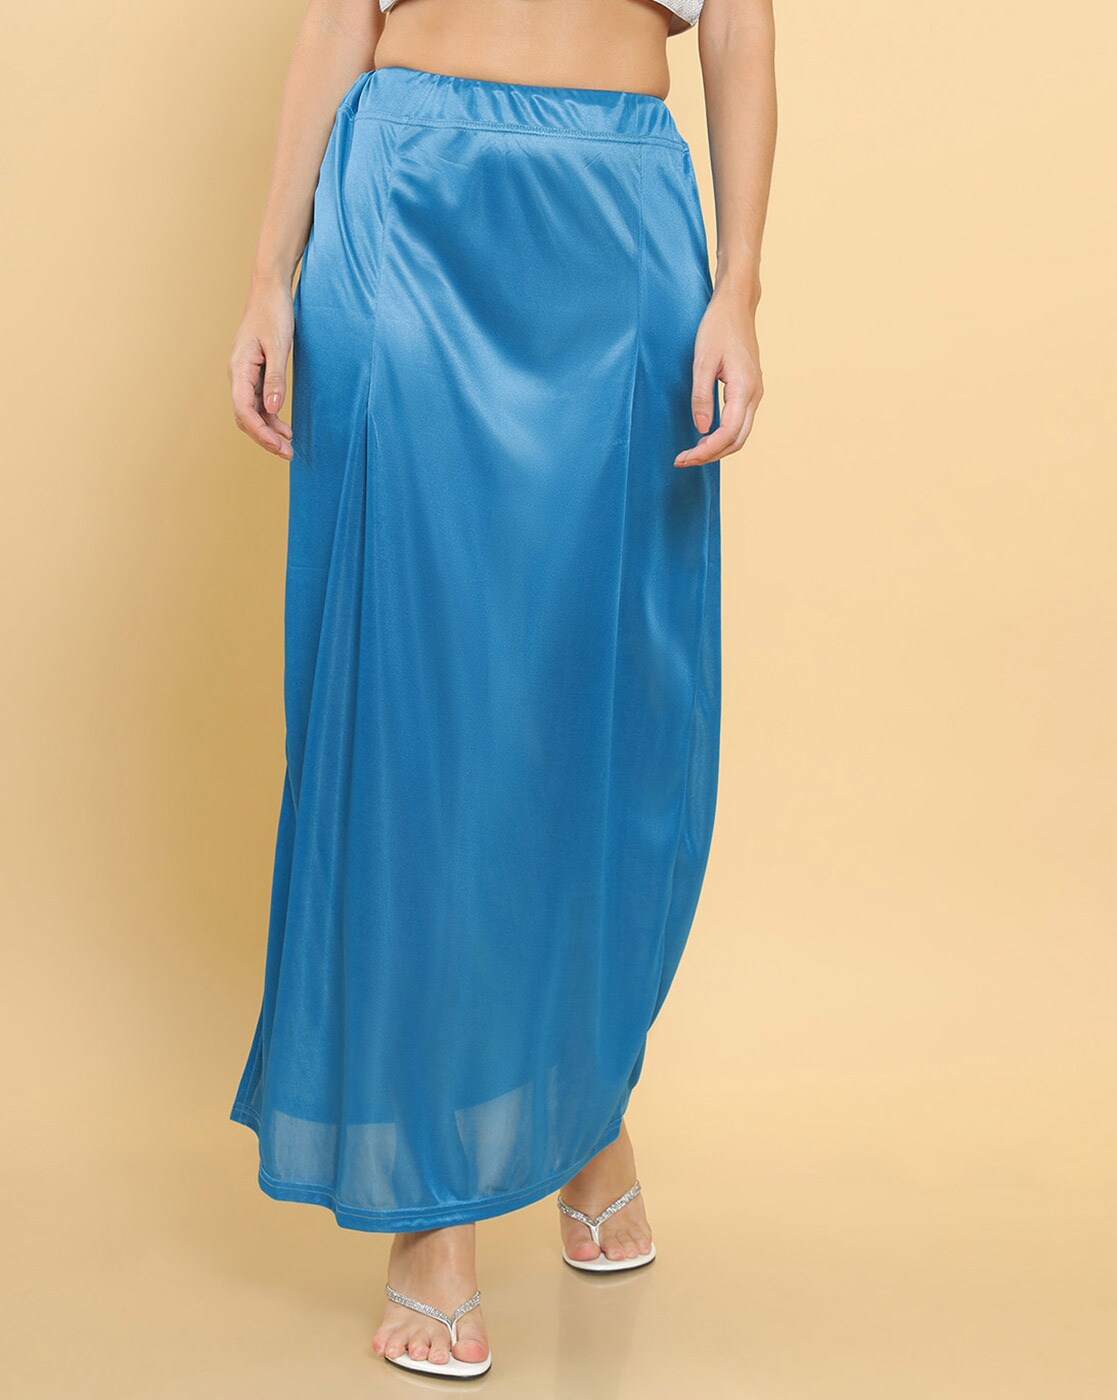 Satin Petticoats - Buy Satin Petticoats Online Starting at Just